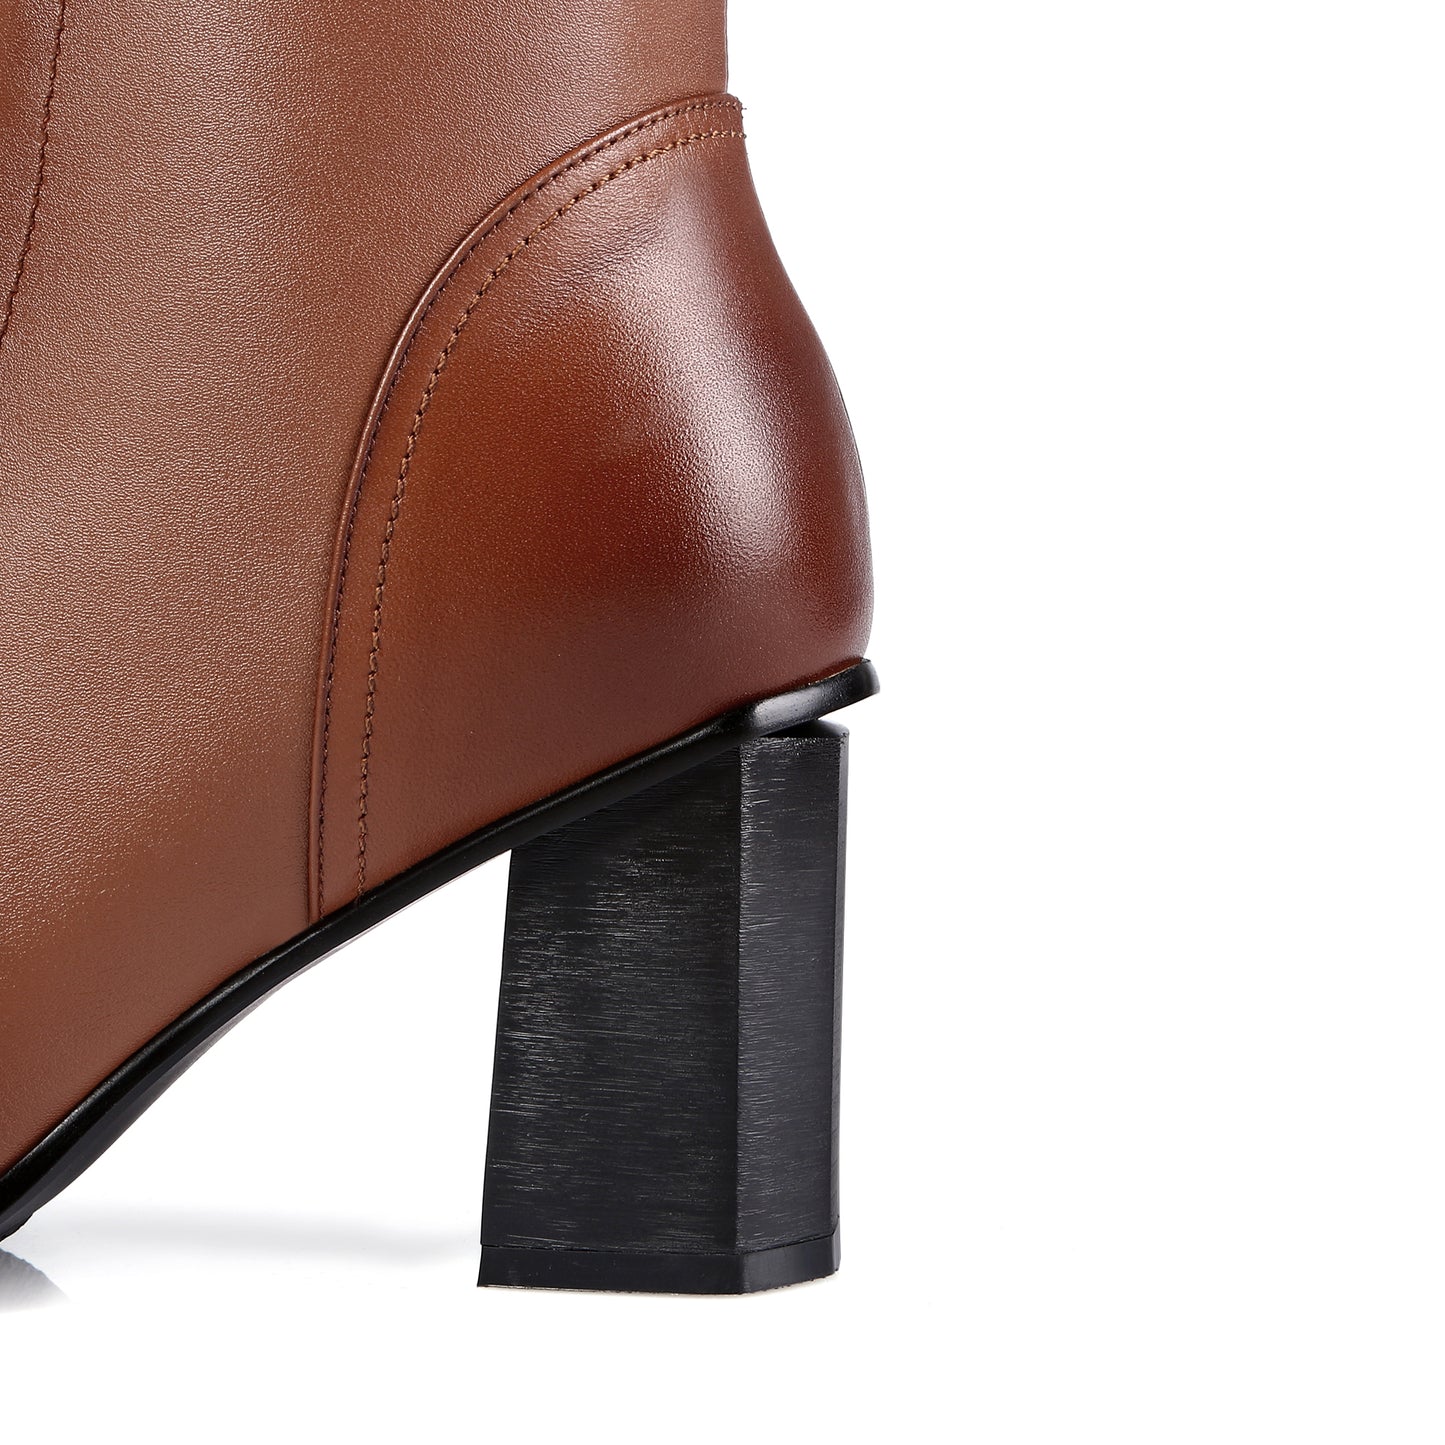 TinaCus Women's Genuine Leather Pointed Toe Sylish Sleftie Handmade Side Zipper Mid Chunky Heel Knee High Boots